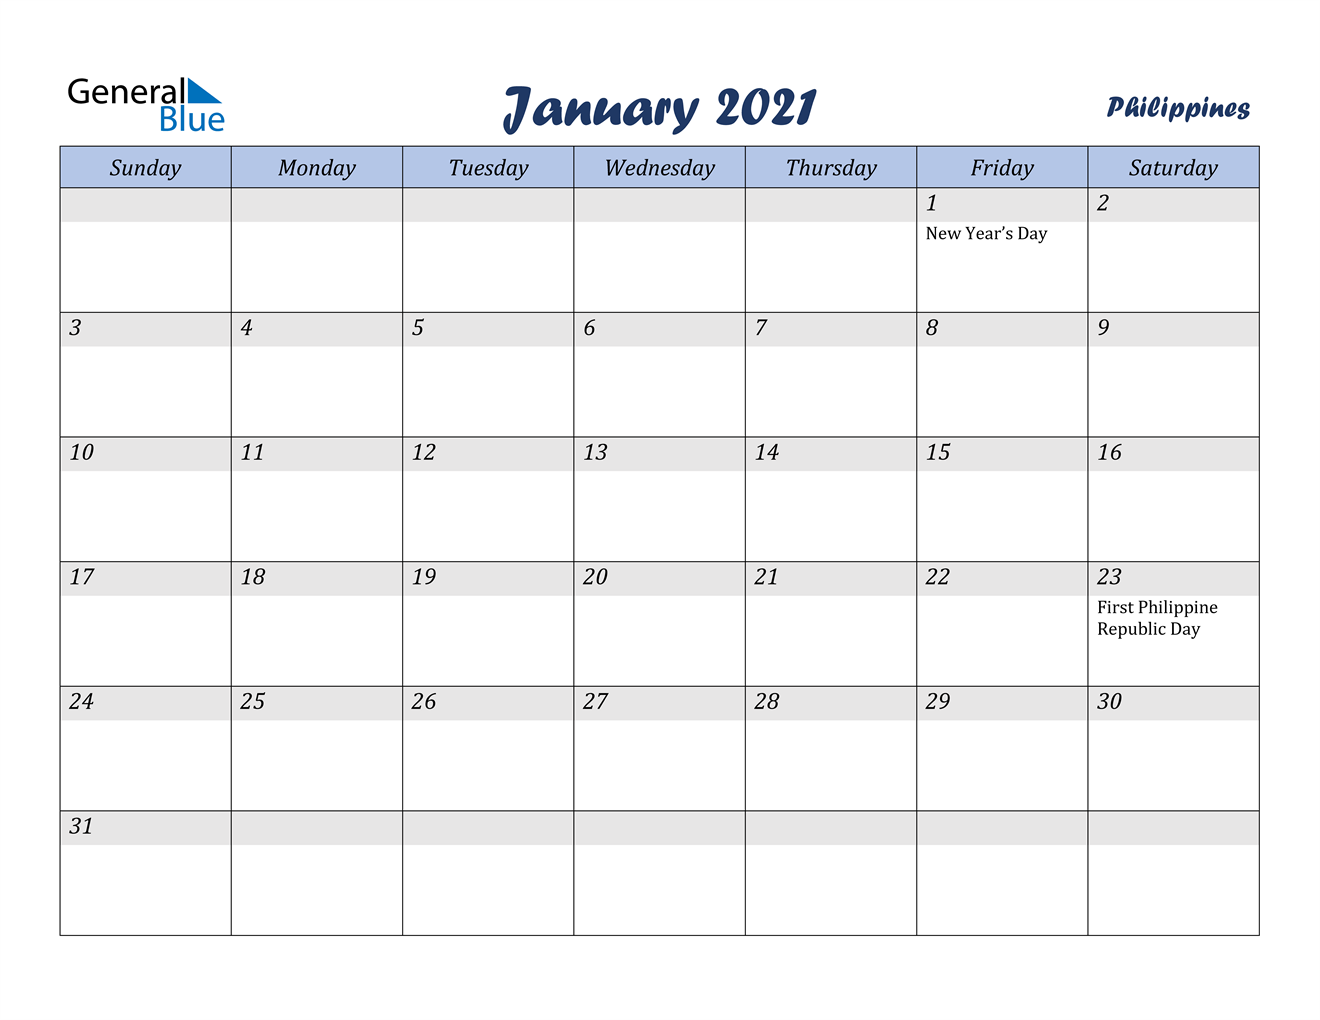 January 2021 Calendar - Philippines